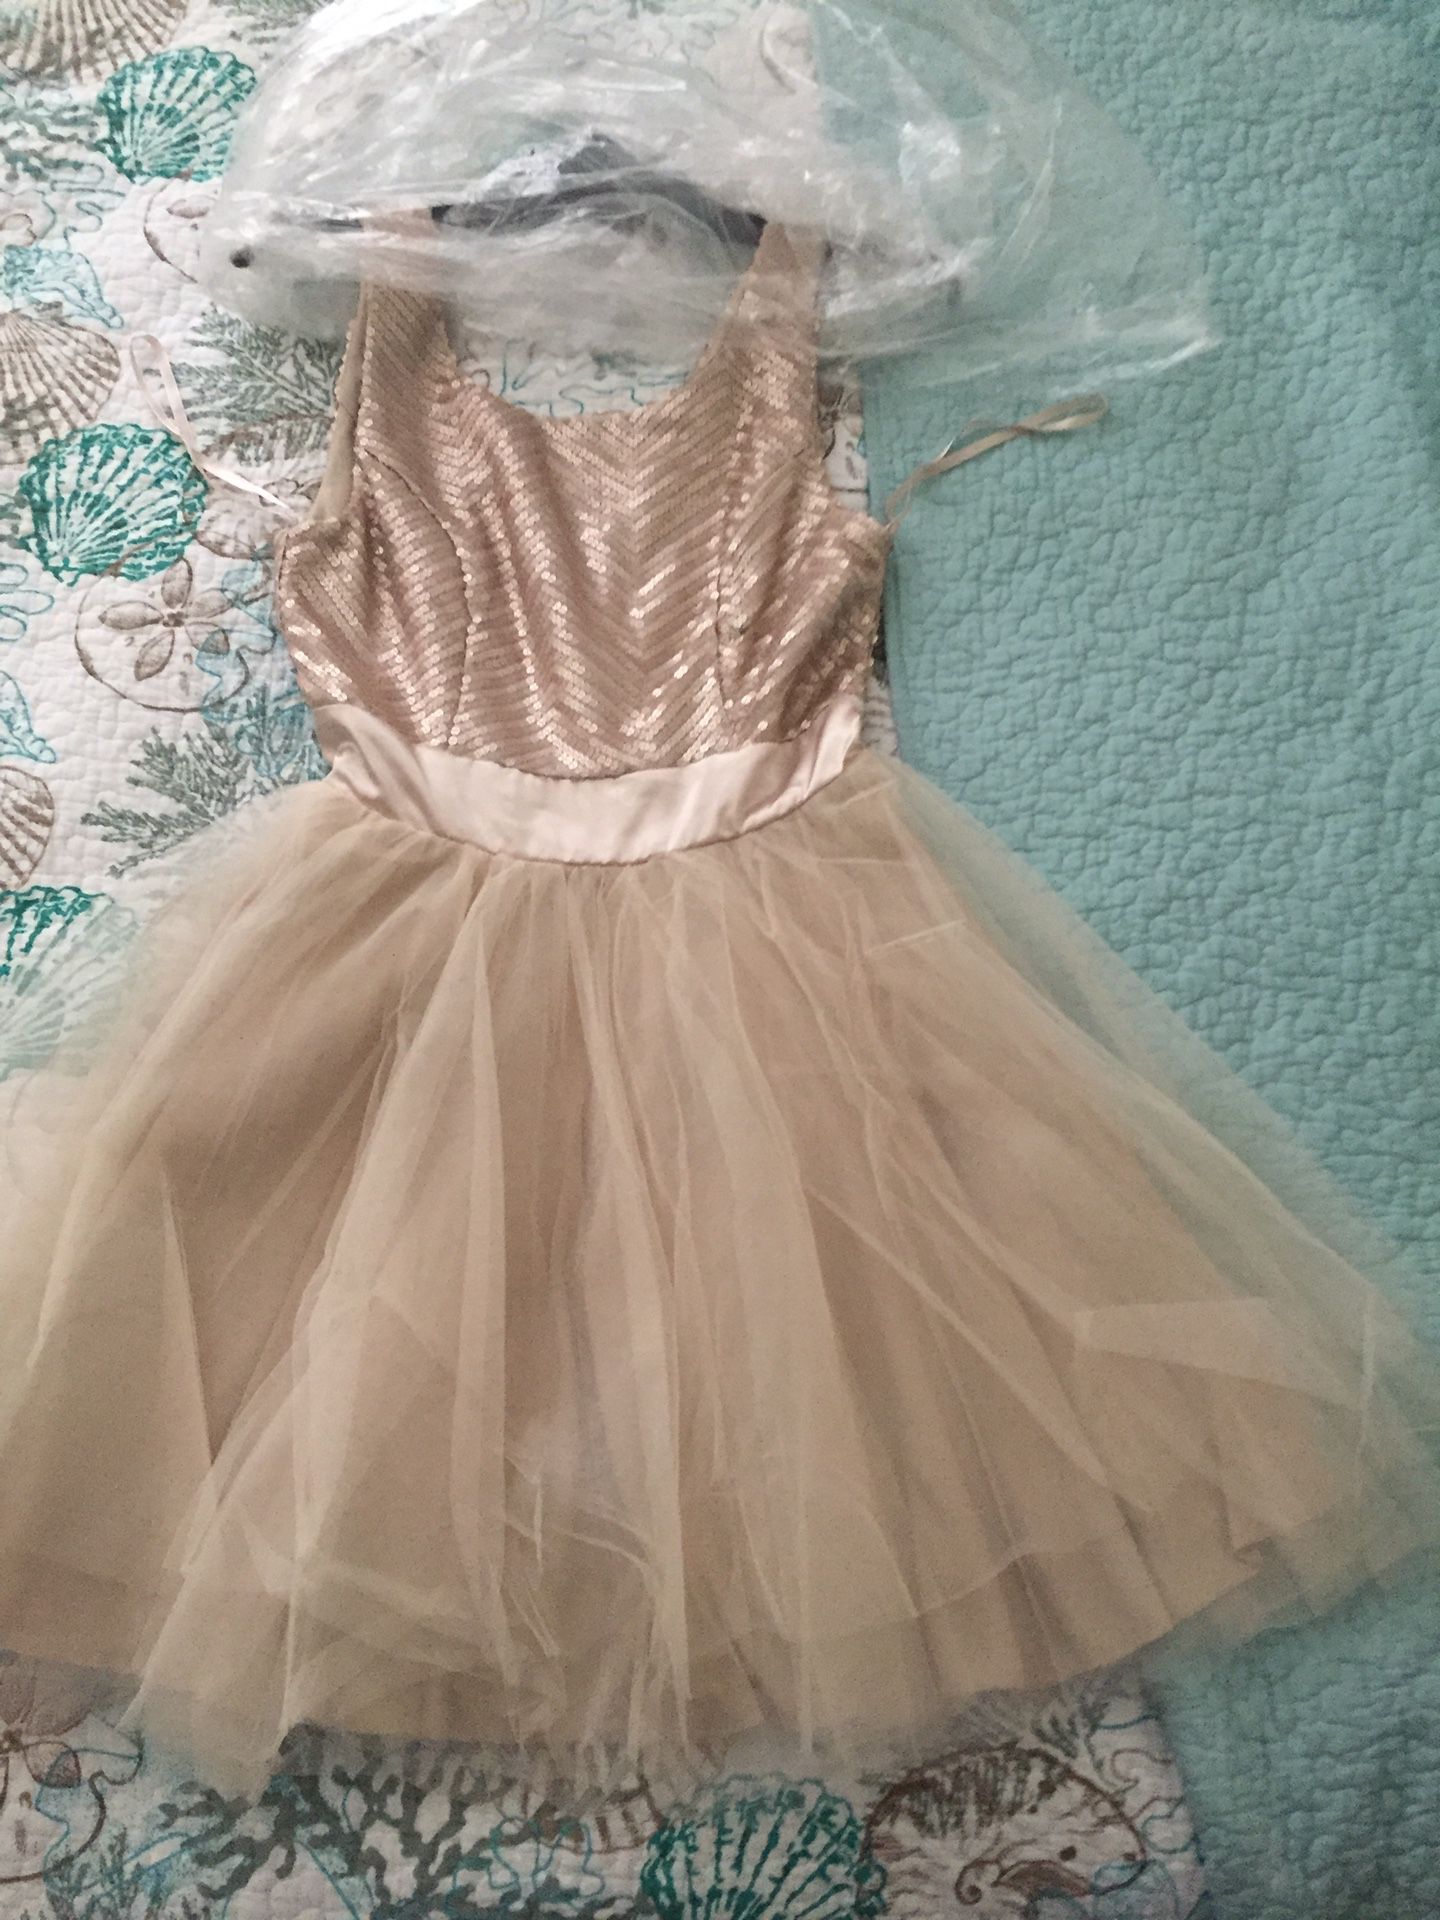 Size 9 dress